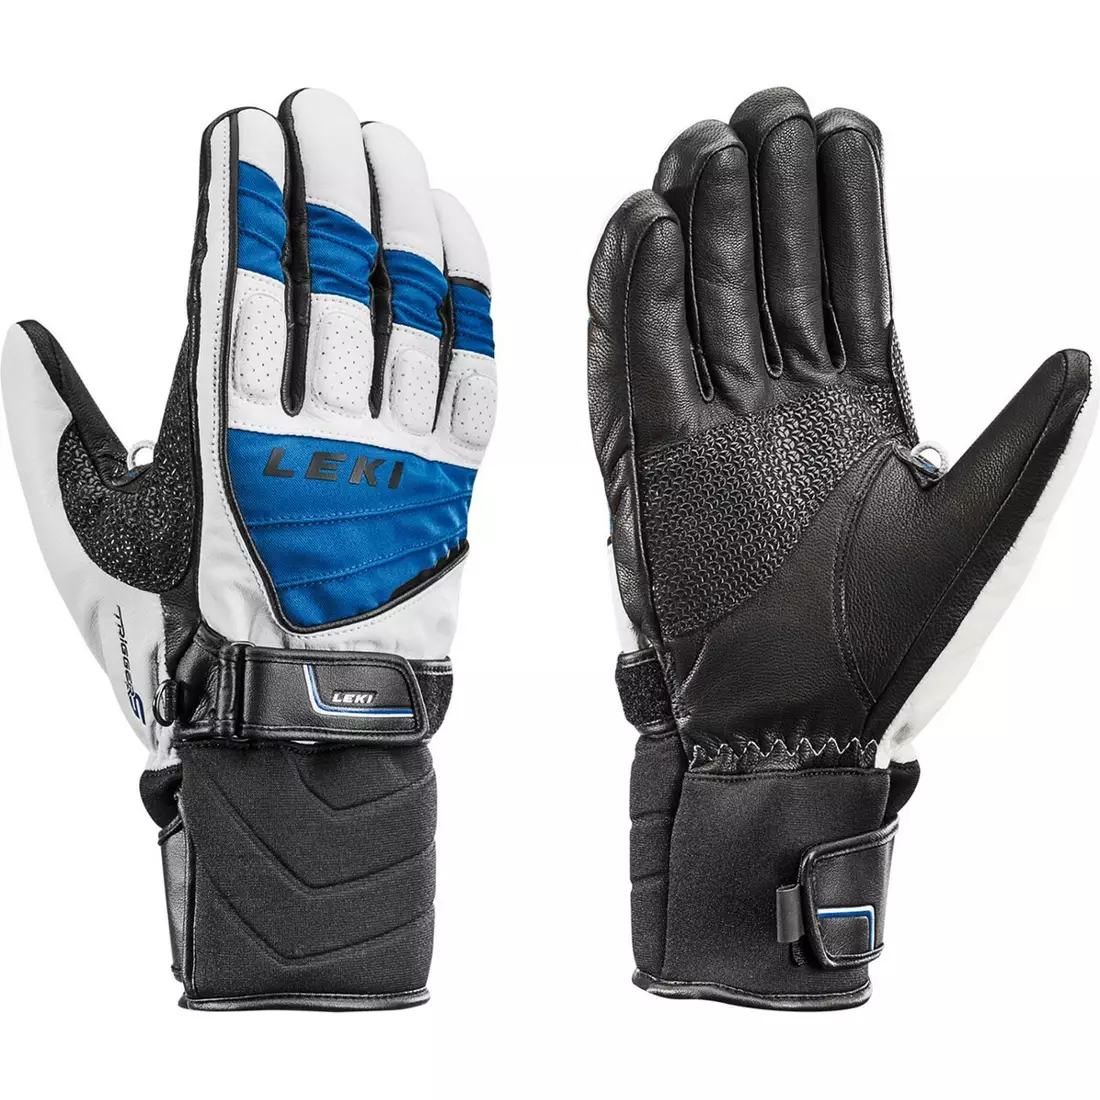 LEKI Ski gloves Griffin S blue, 636846302090